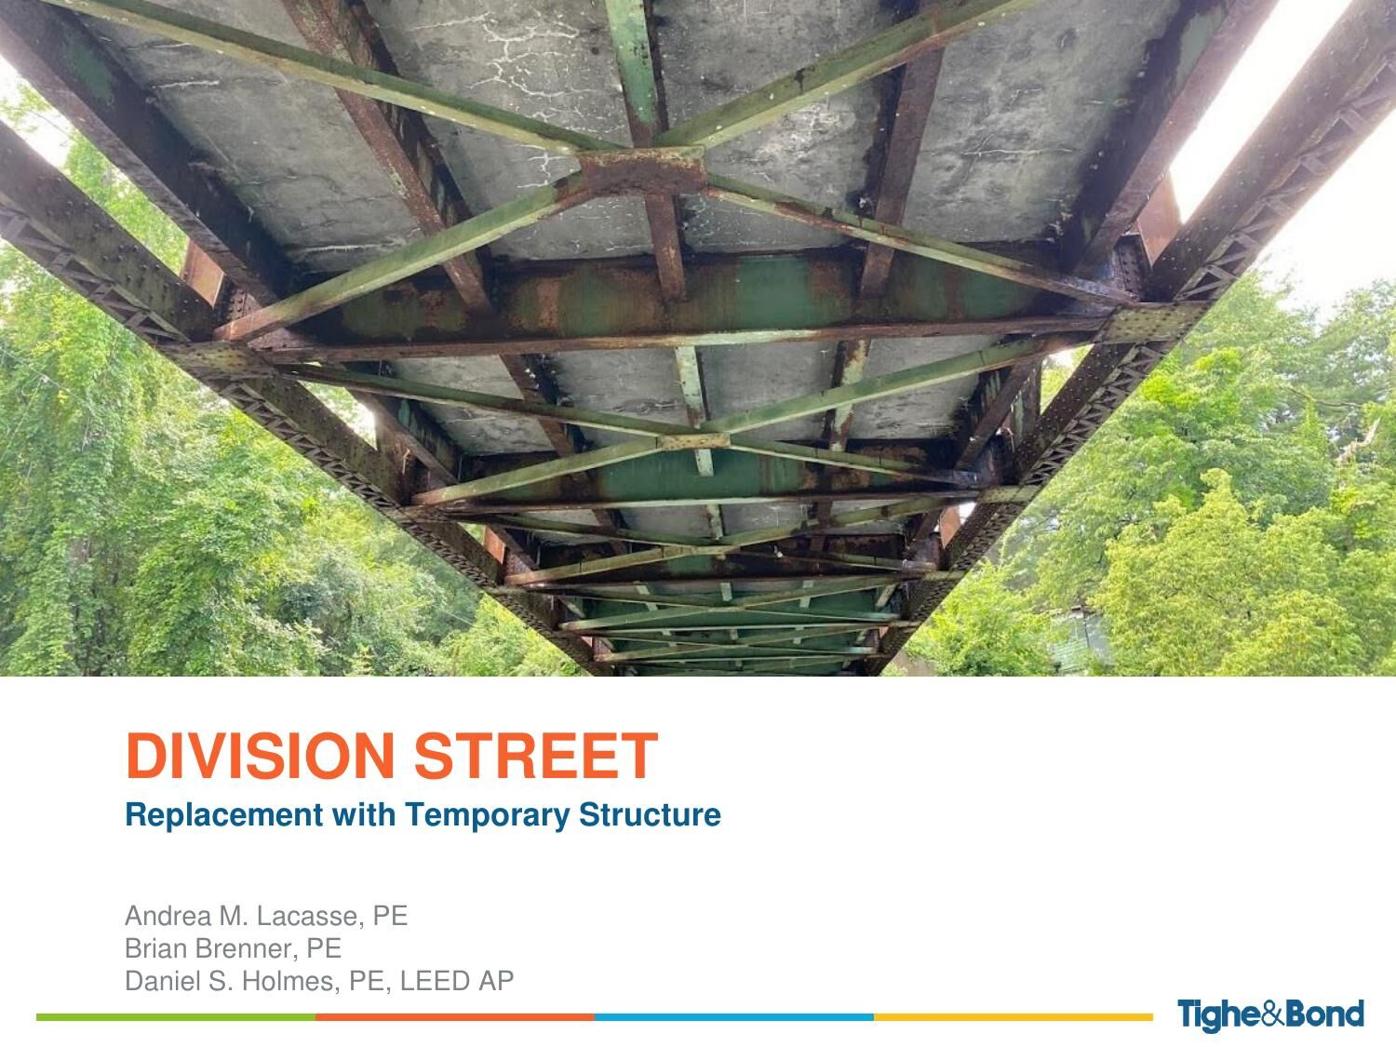 Engineer's plans for the Division Street modular bridge